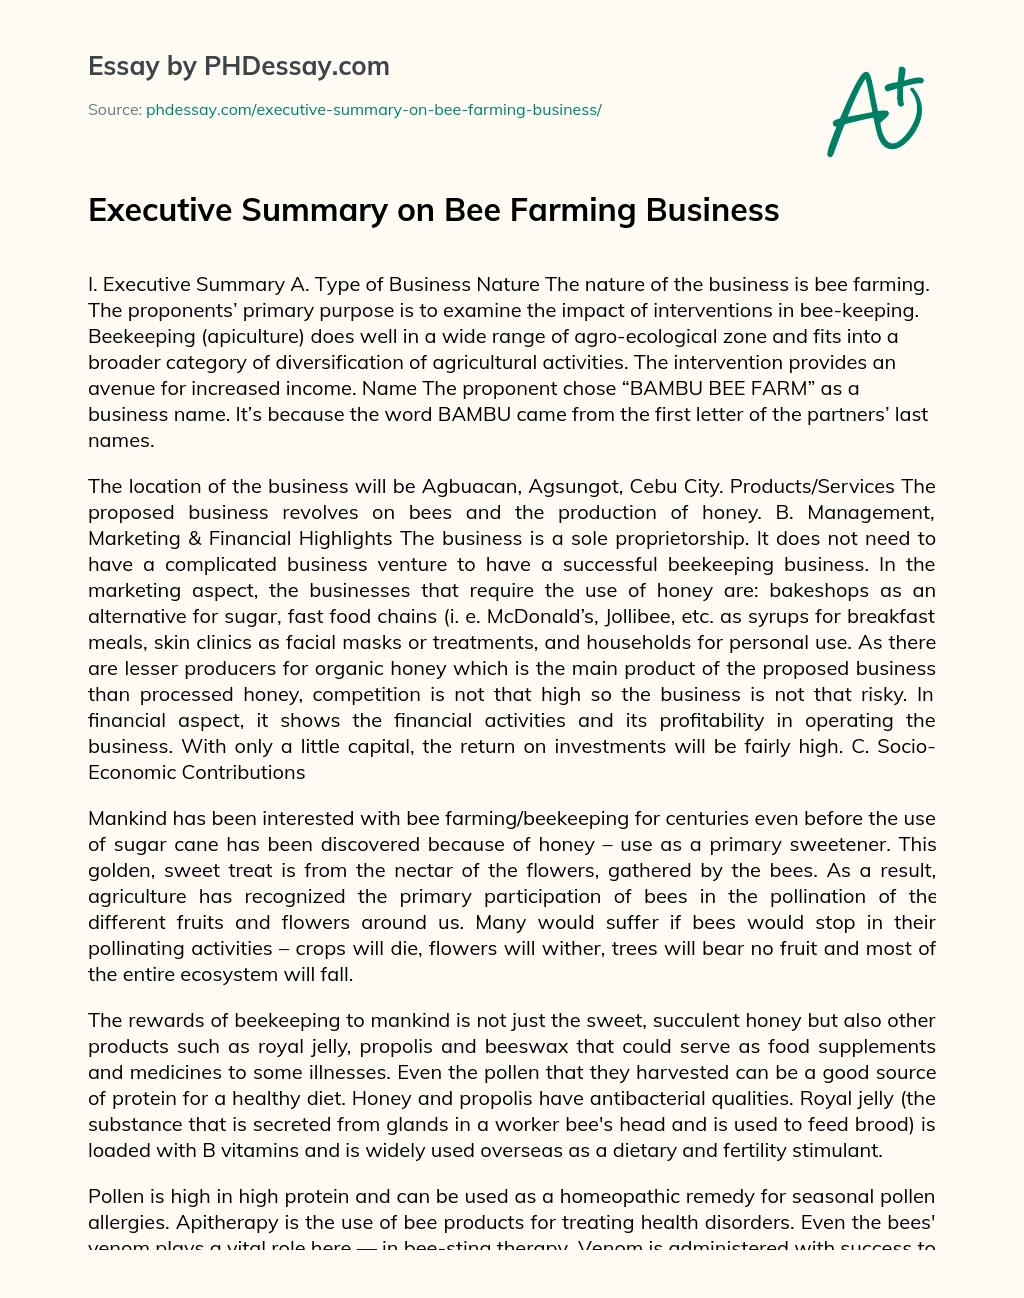 Executive Summary on Bee Farming Business essay